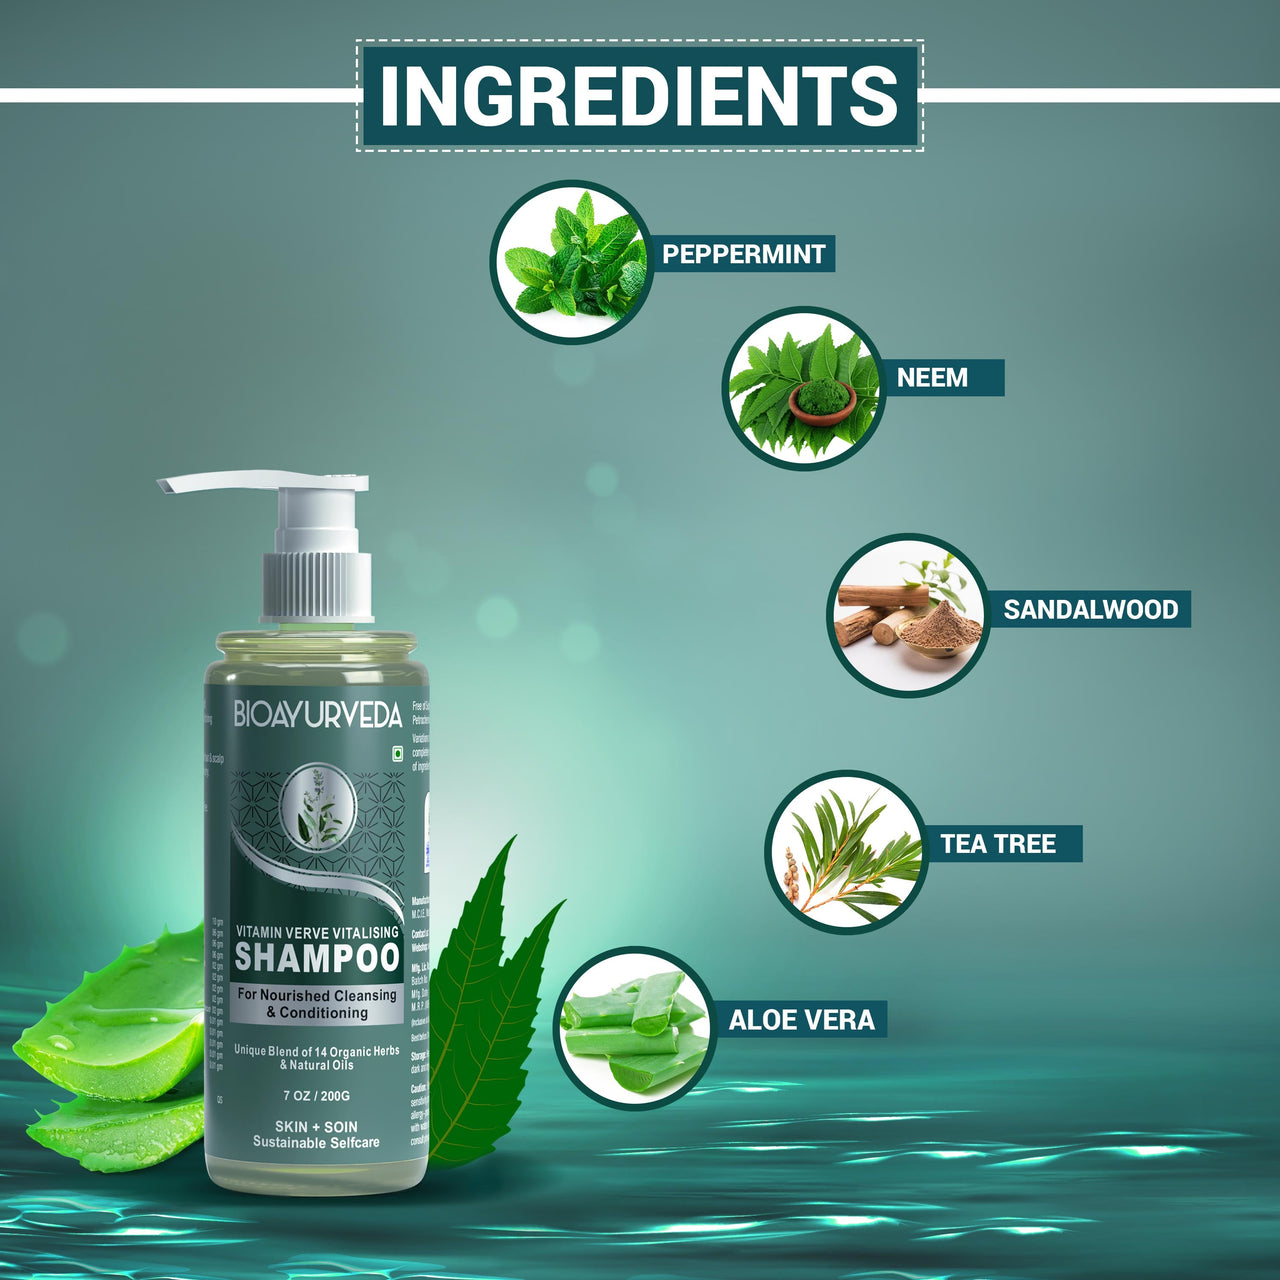 Ingredients Of Vitamin Verve Vitalising Shampoo